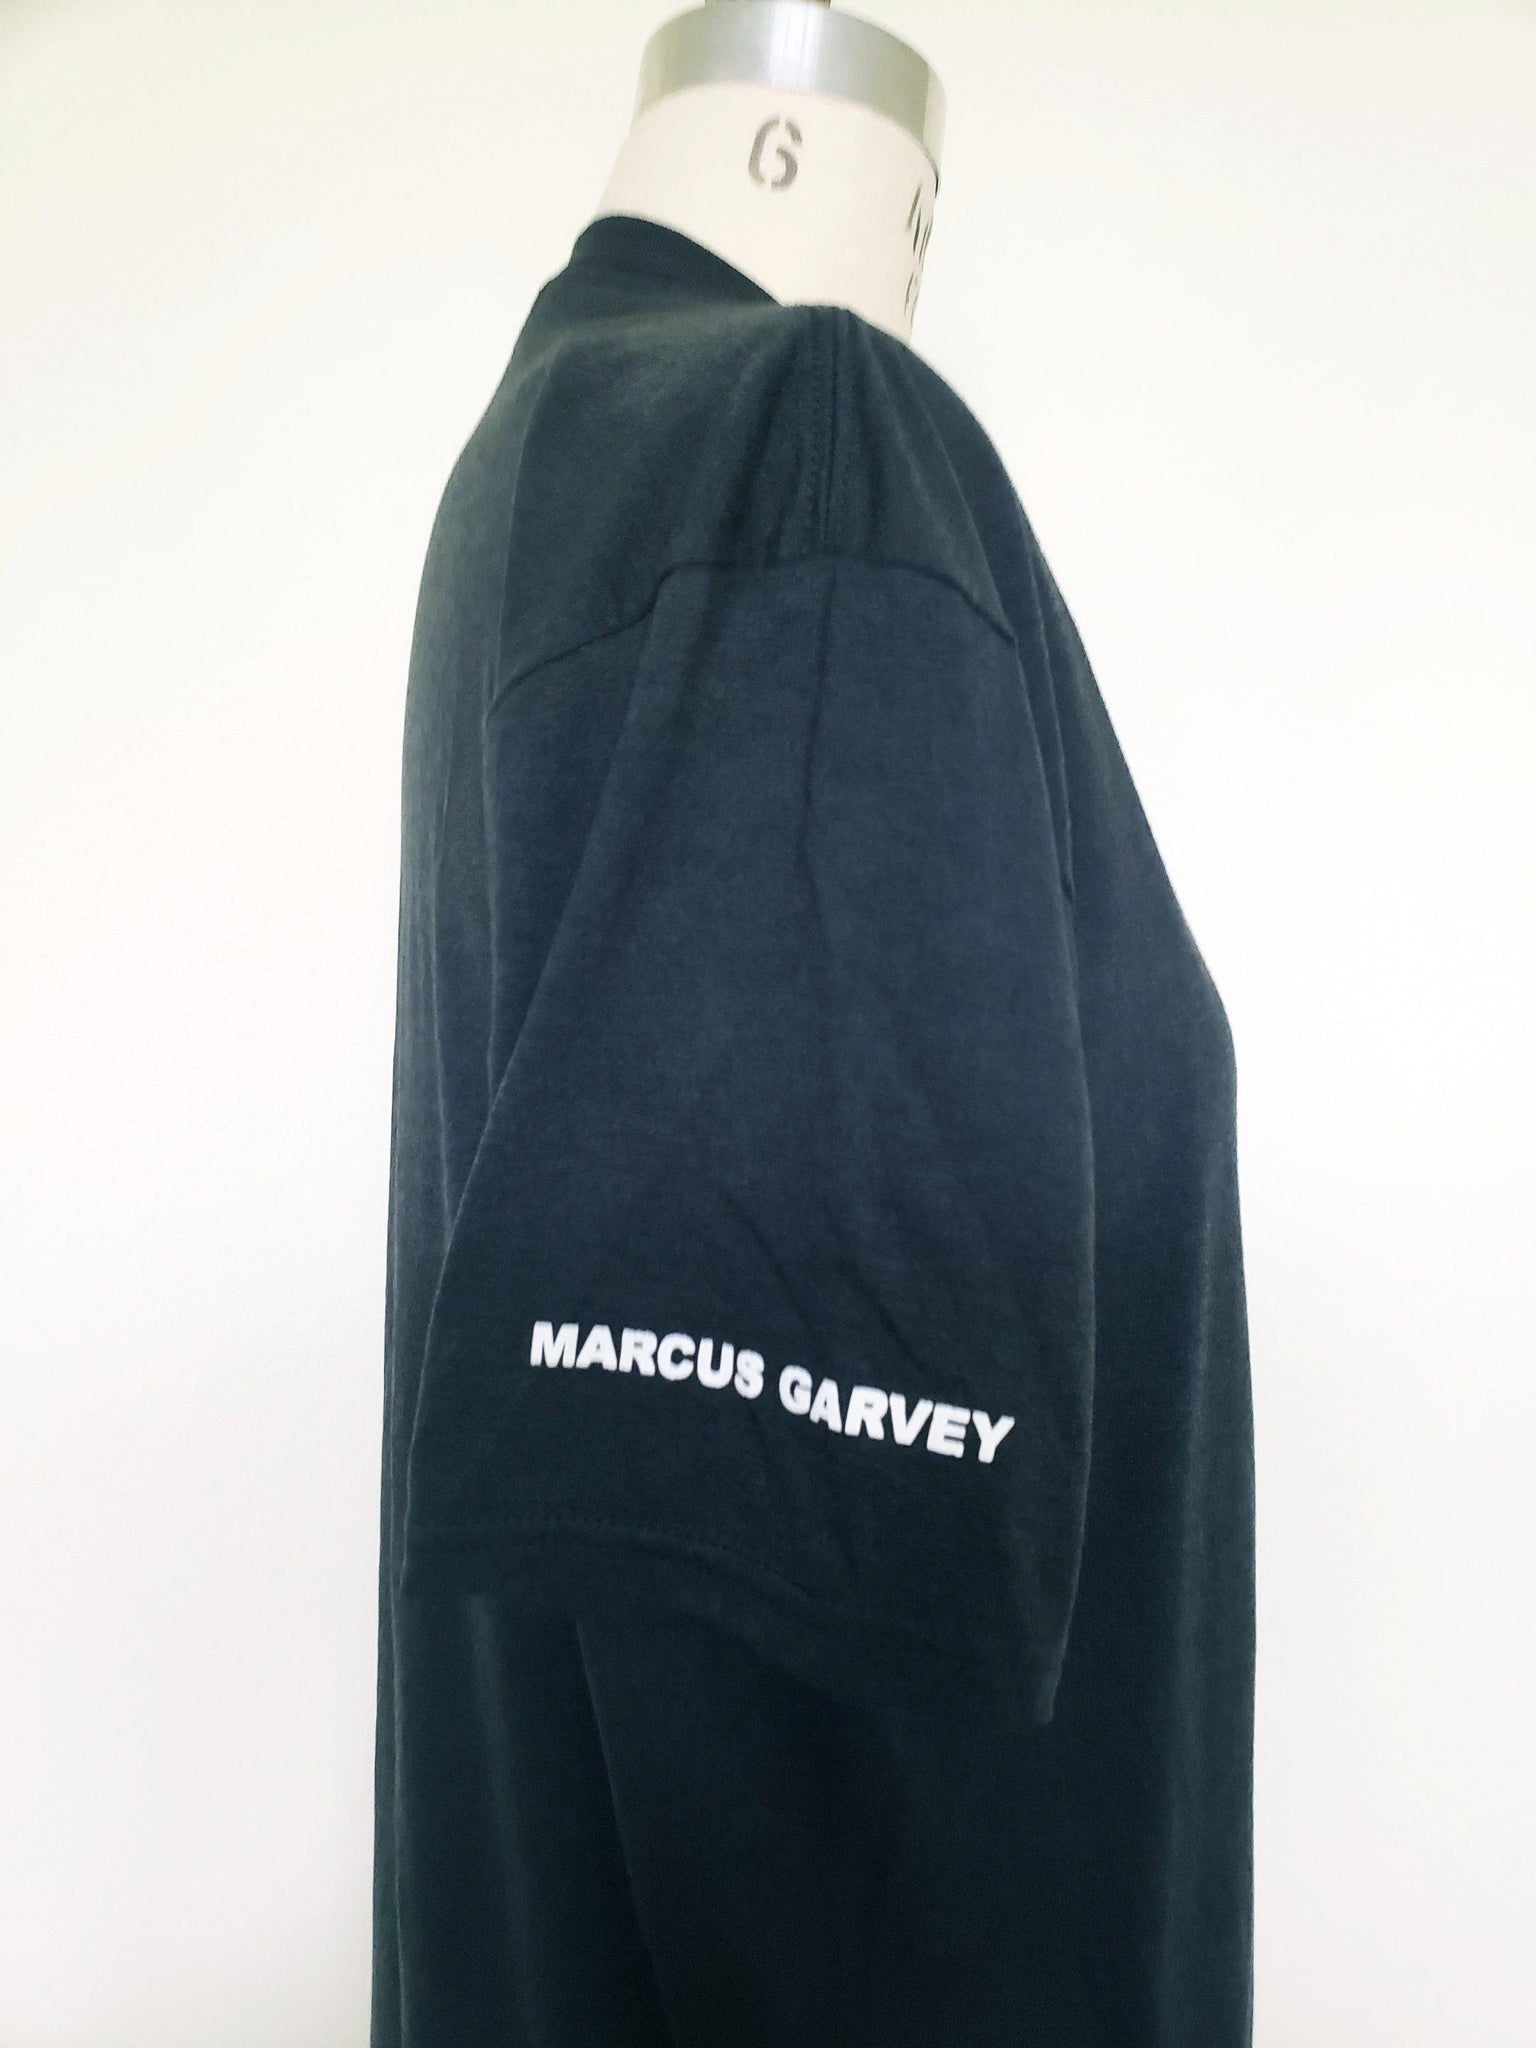 Marcus Garvey Tee Shirt - ChicCityVintage